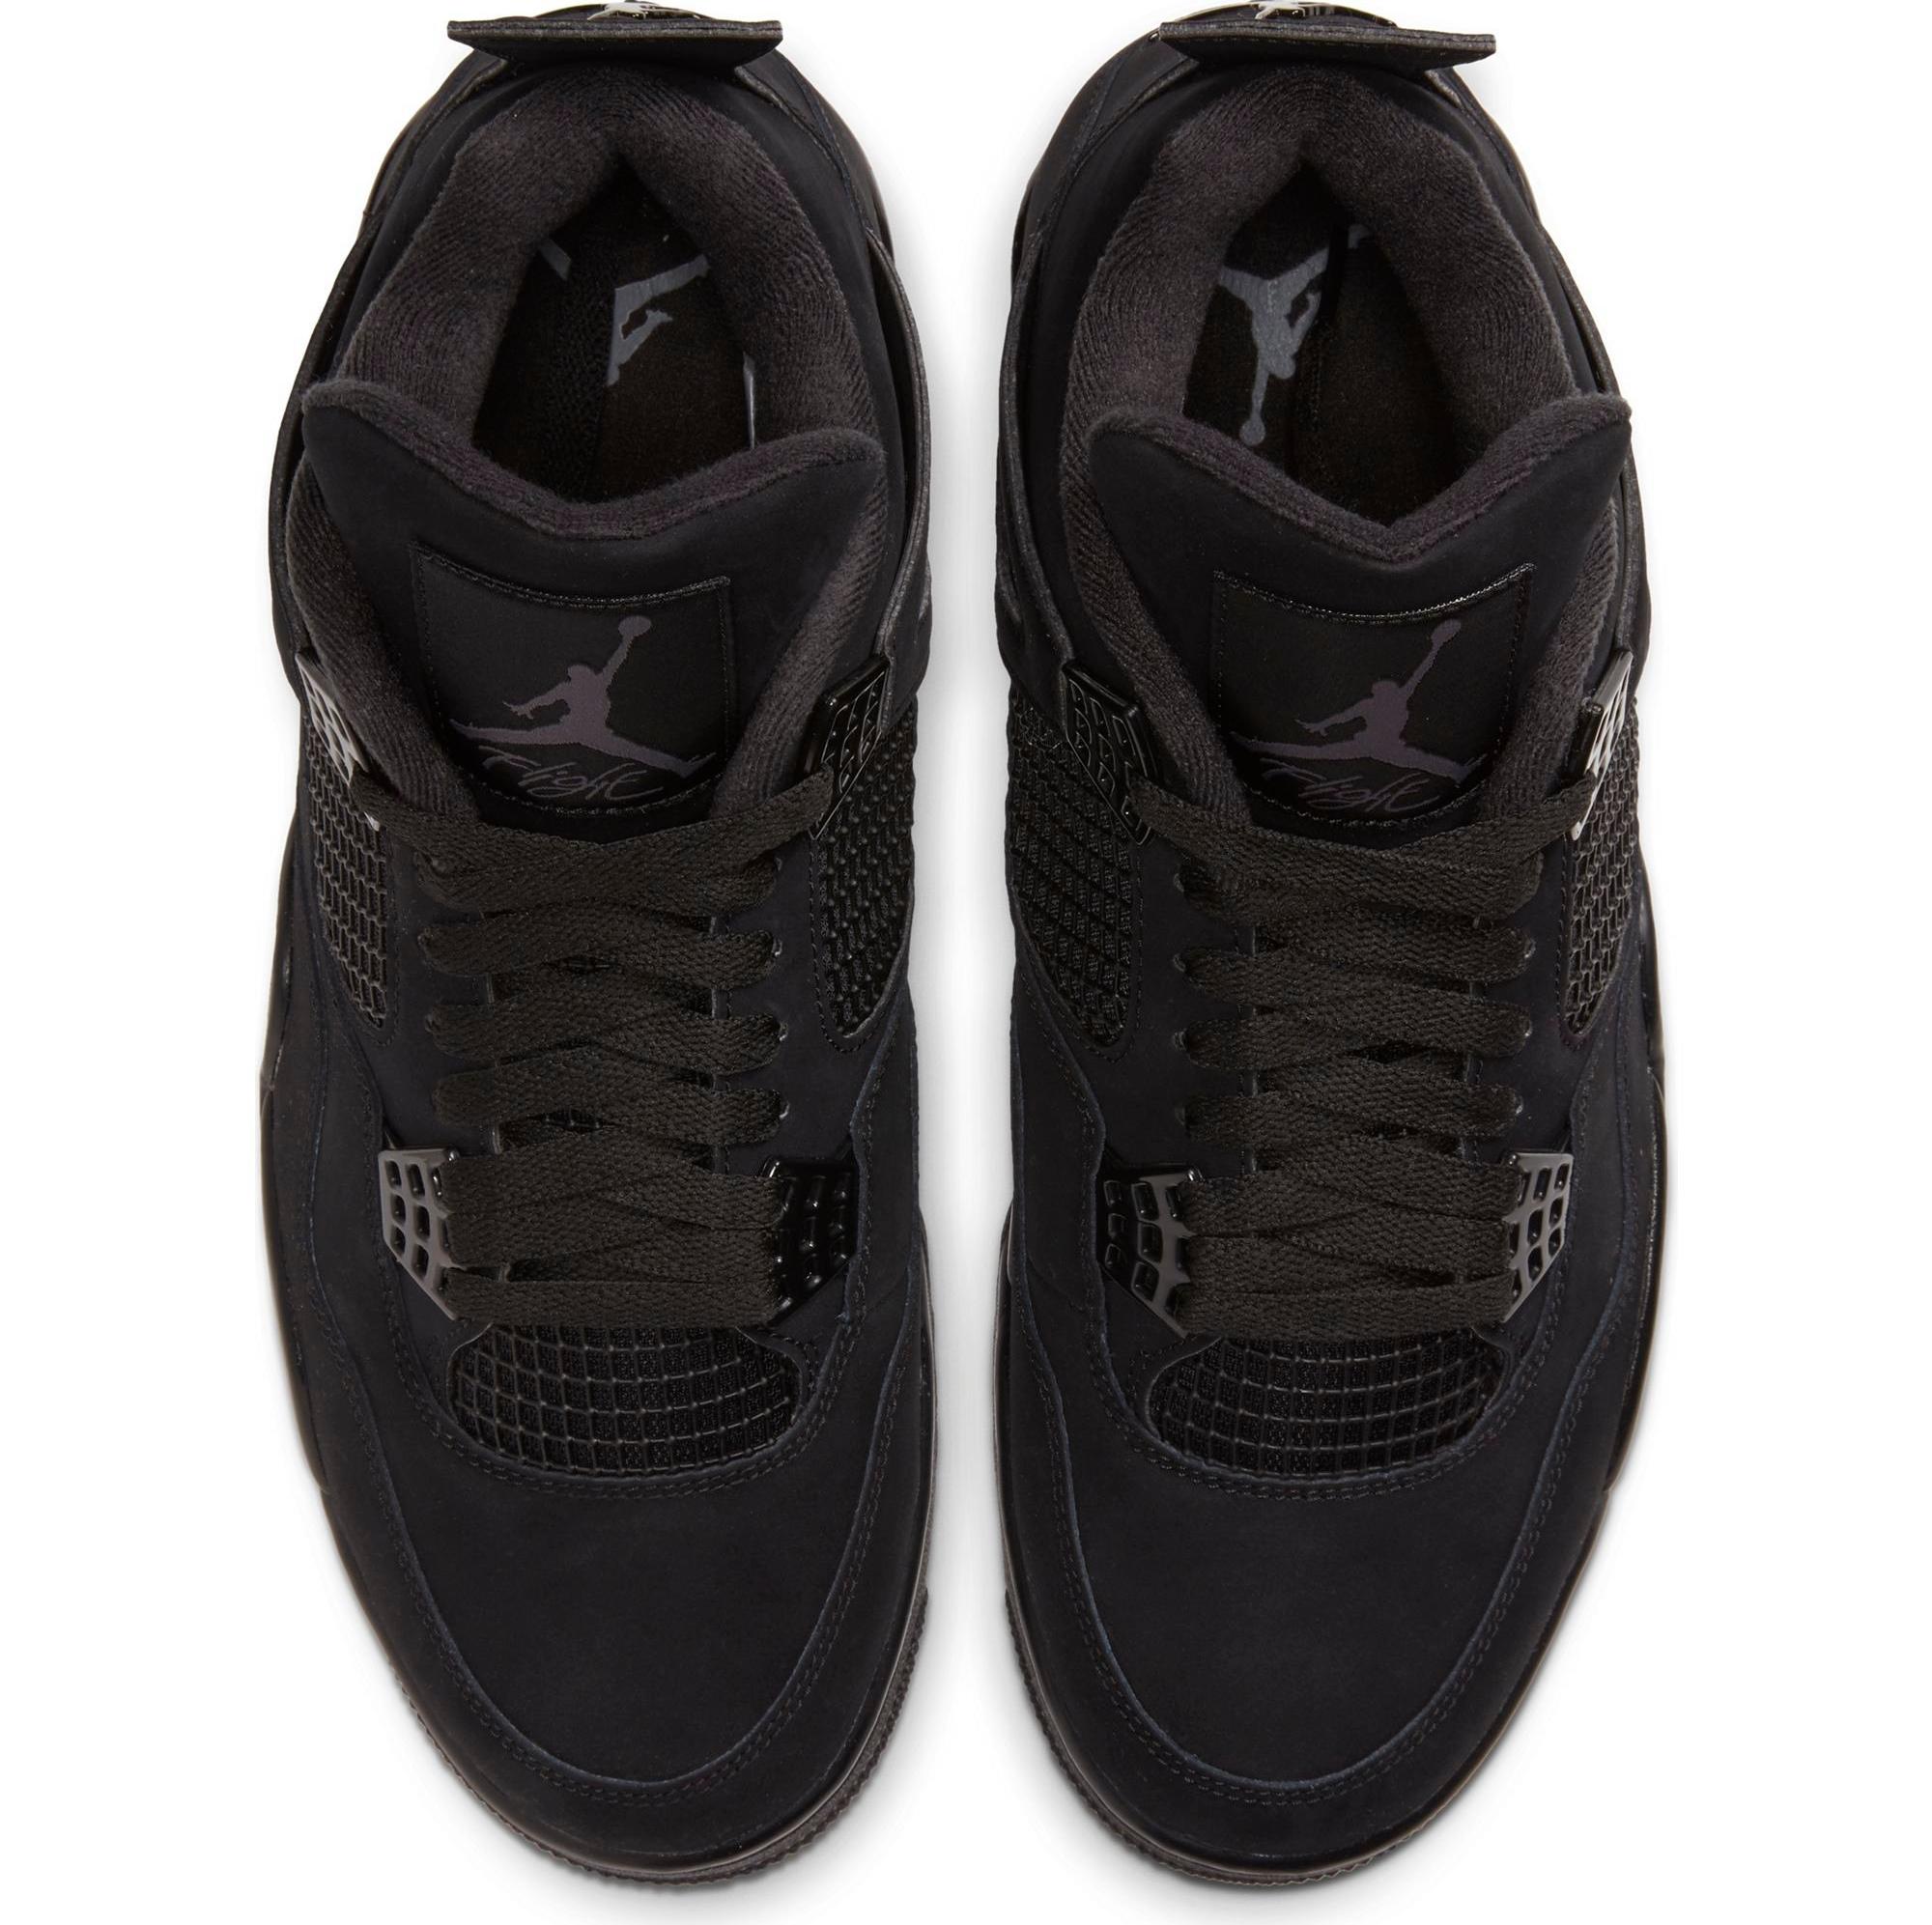 Sneakers Release – Jordan Retro 4 SE “Craft”